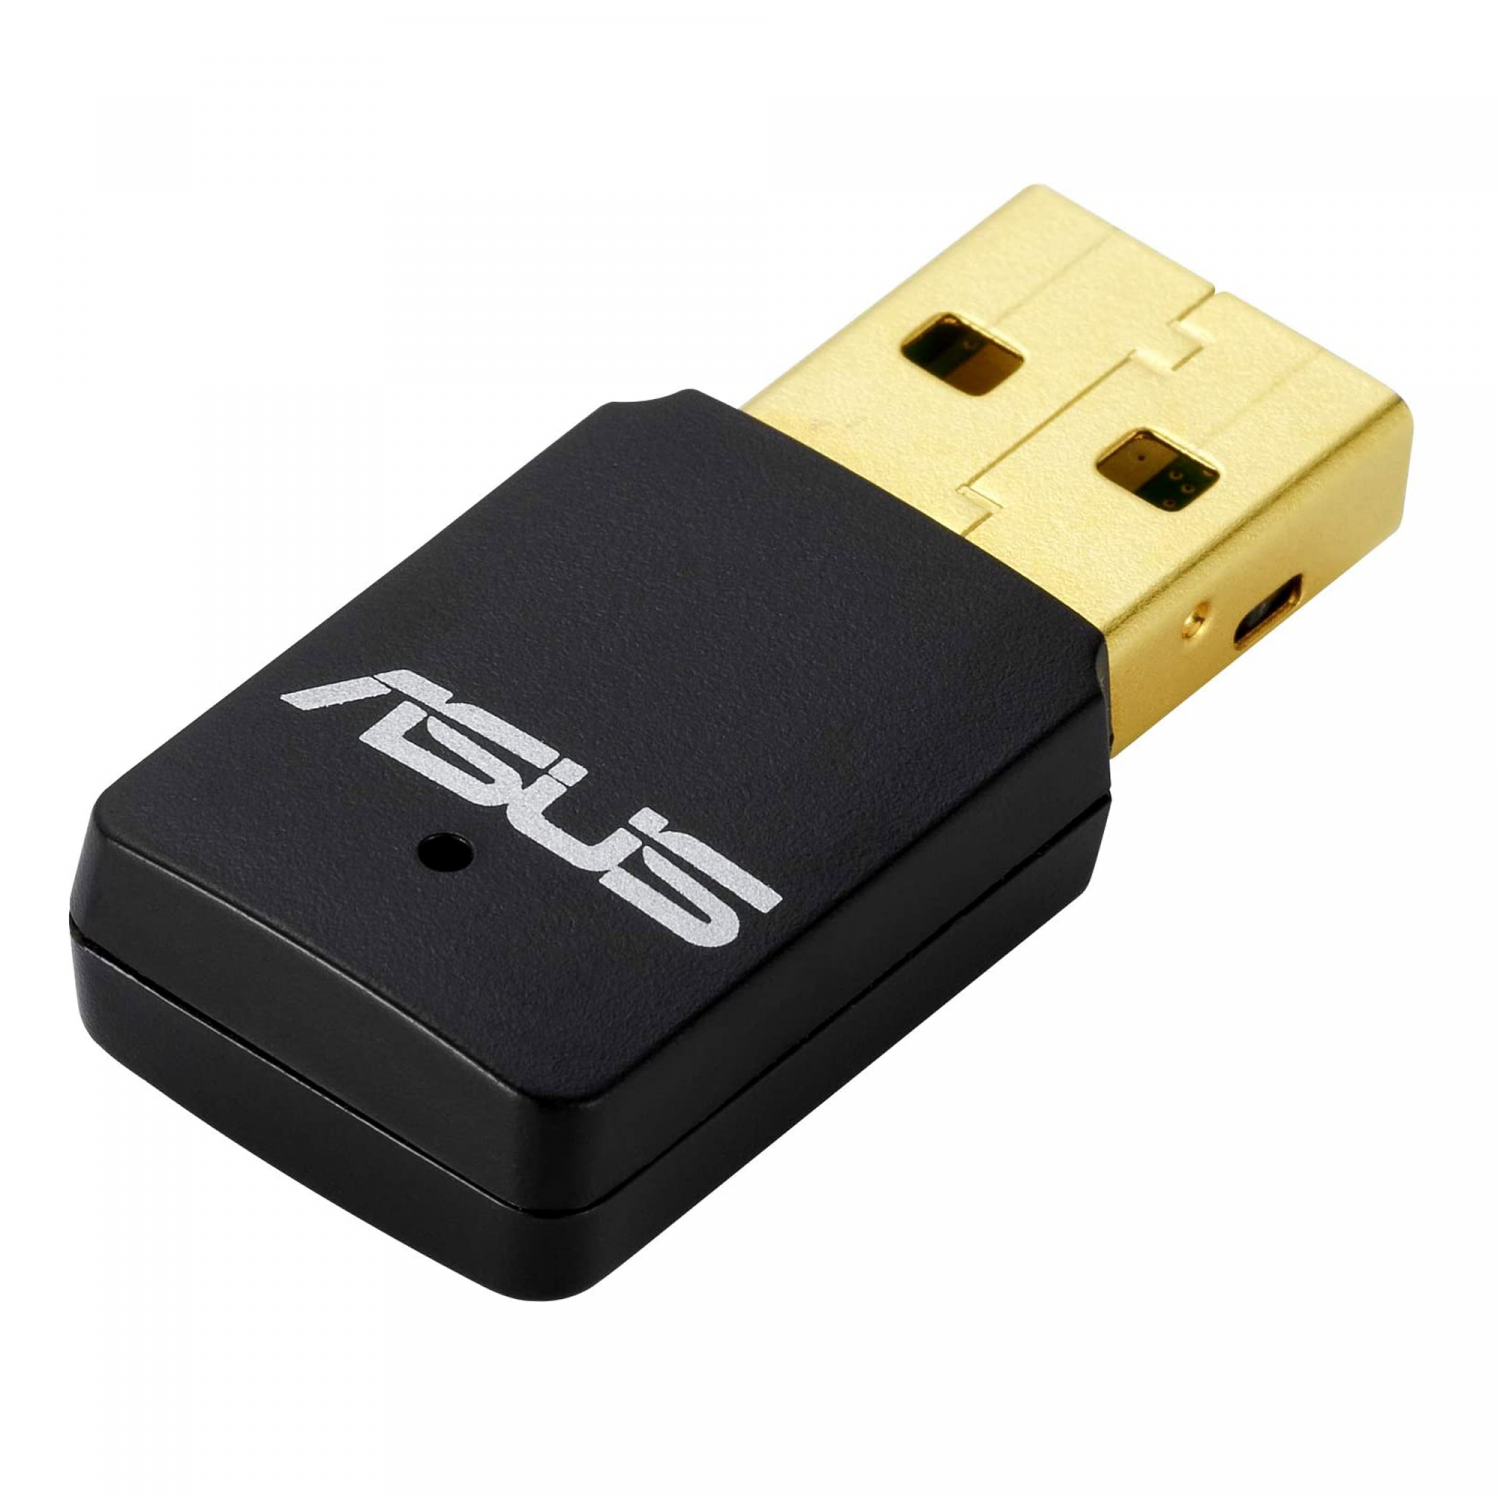 Se ASUS USB-N13 C1 Wireless-N300 USB-adapter hos Lammeuld.dk